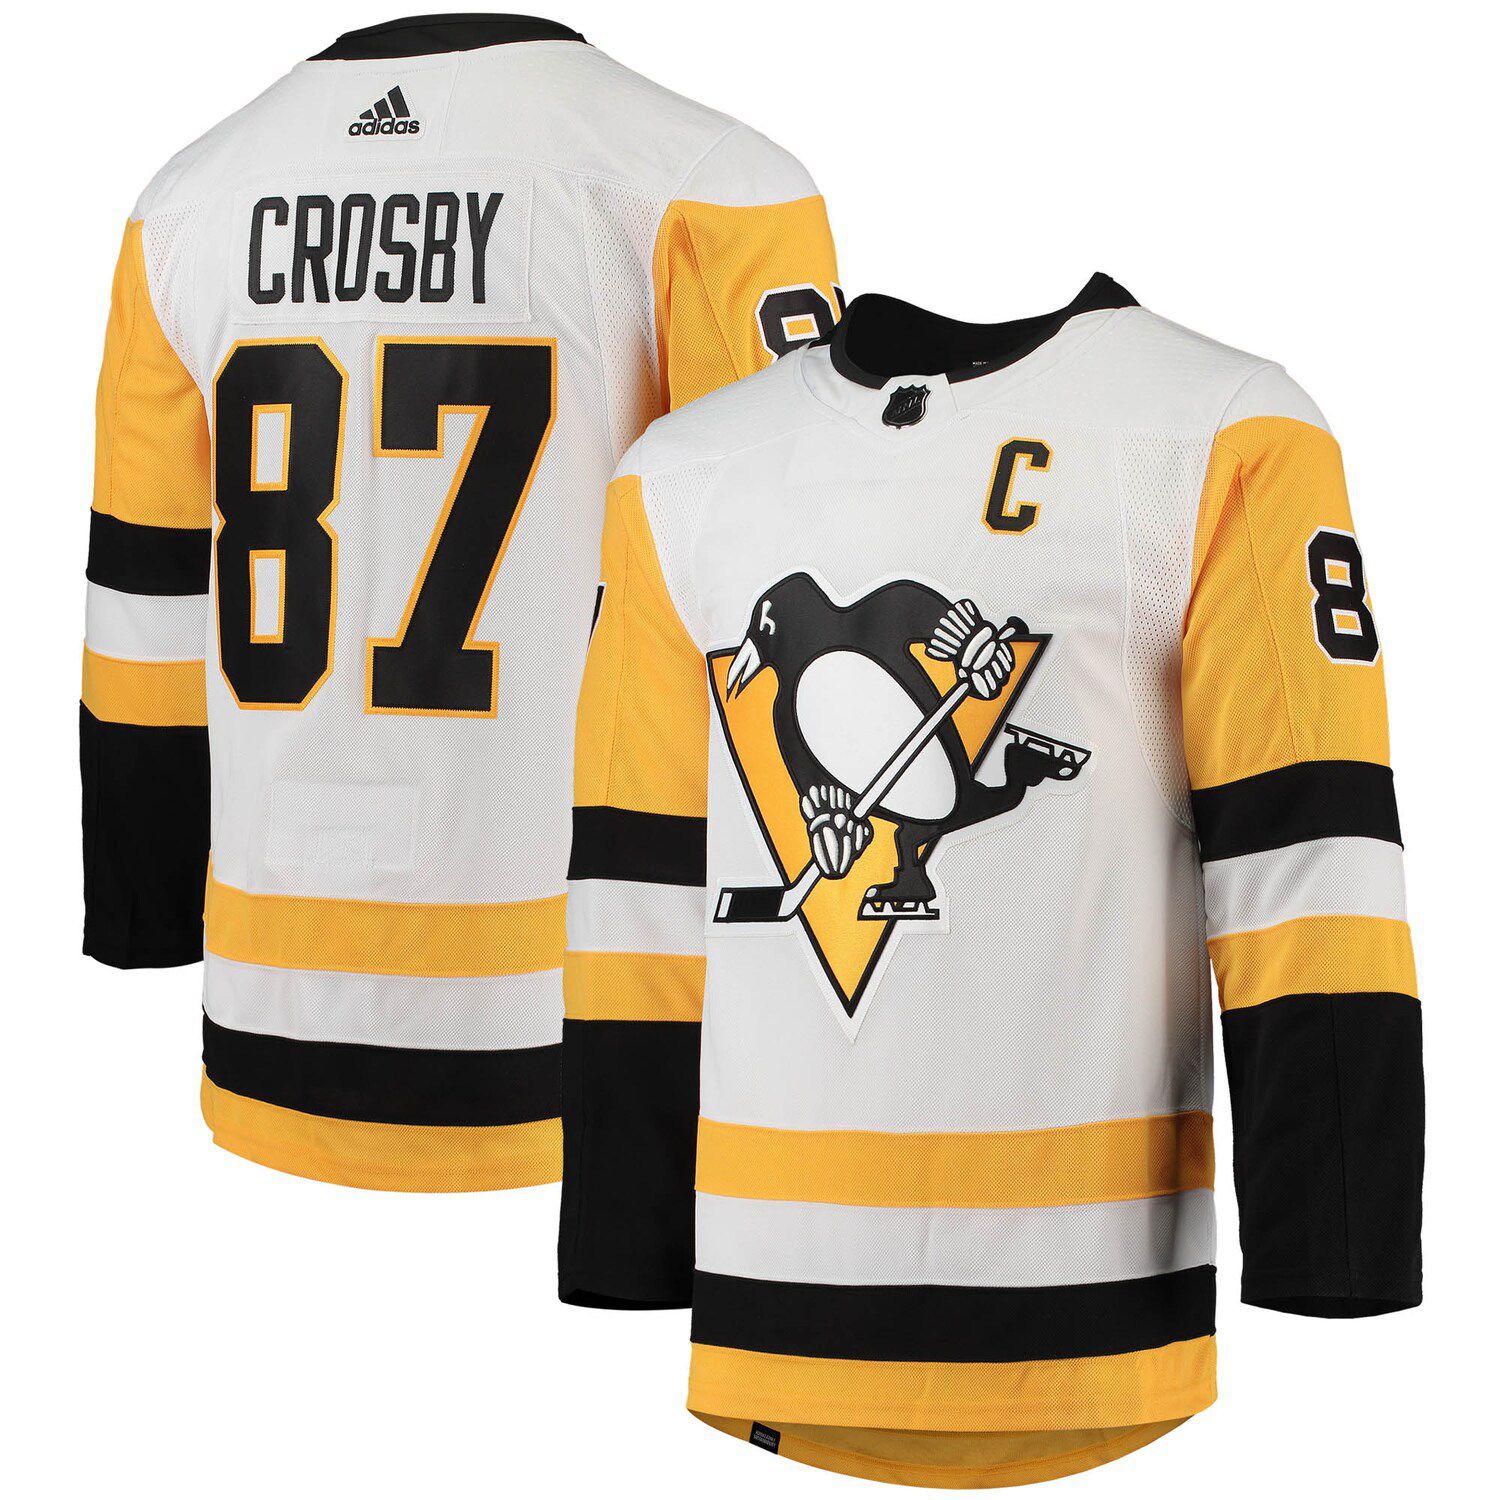 Fanatics Branded Men's Pittsburgh Penguins Premier Breakaway Retired Player Jersey - Paul Coffey - Black